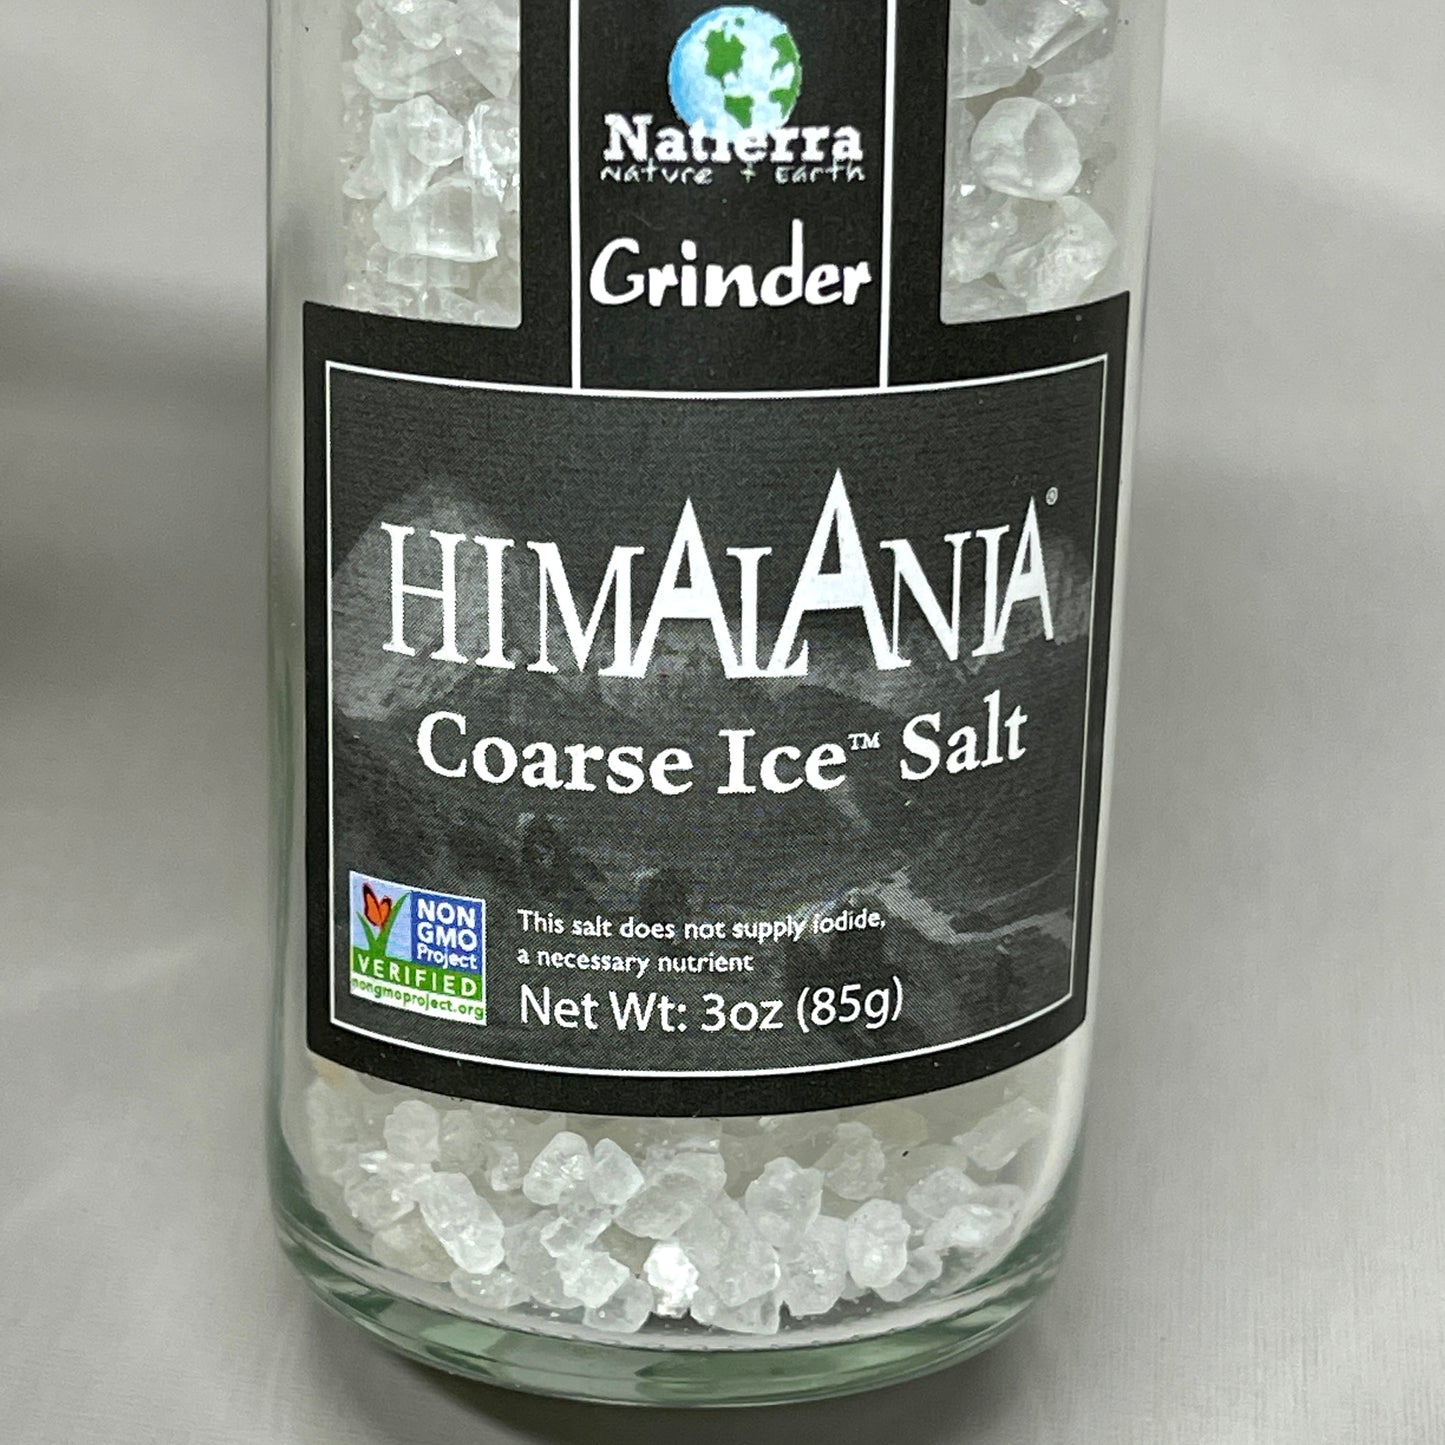 NATIERRA Nature & Earth Himalania Coarse Ice Salt 3 oz Glass Grinder /2 pack (New)